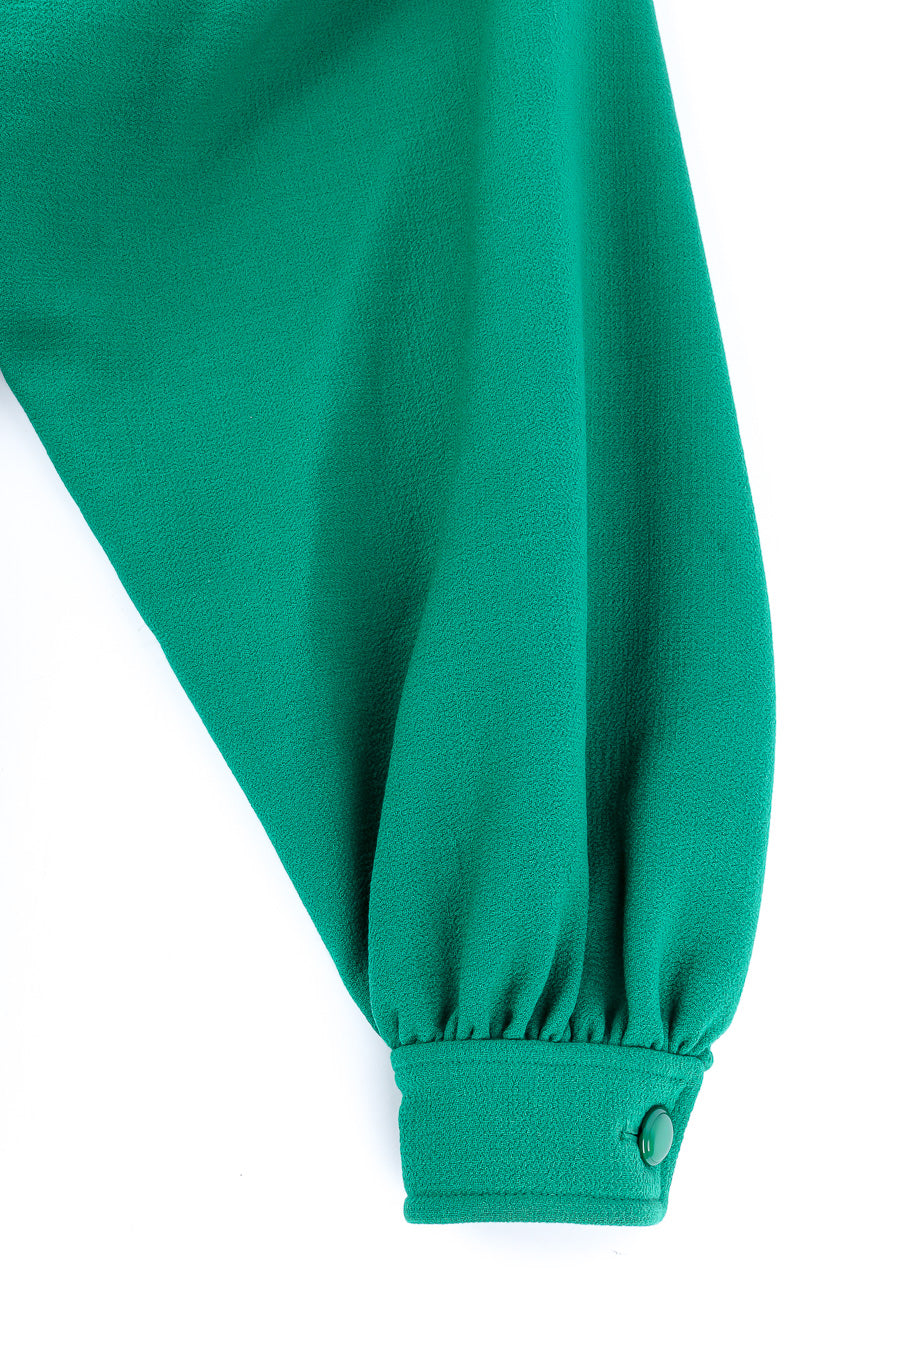 Valentino oversize wool jacket sleeve details @recessla